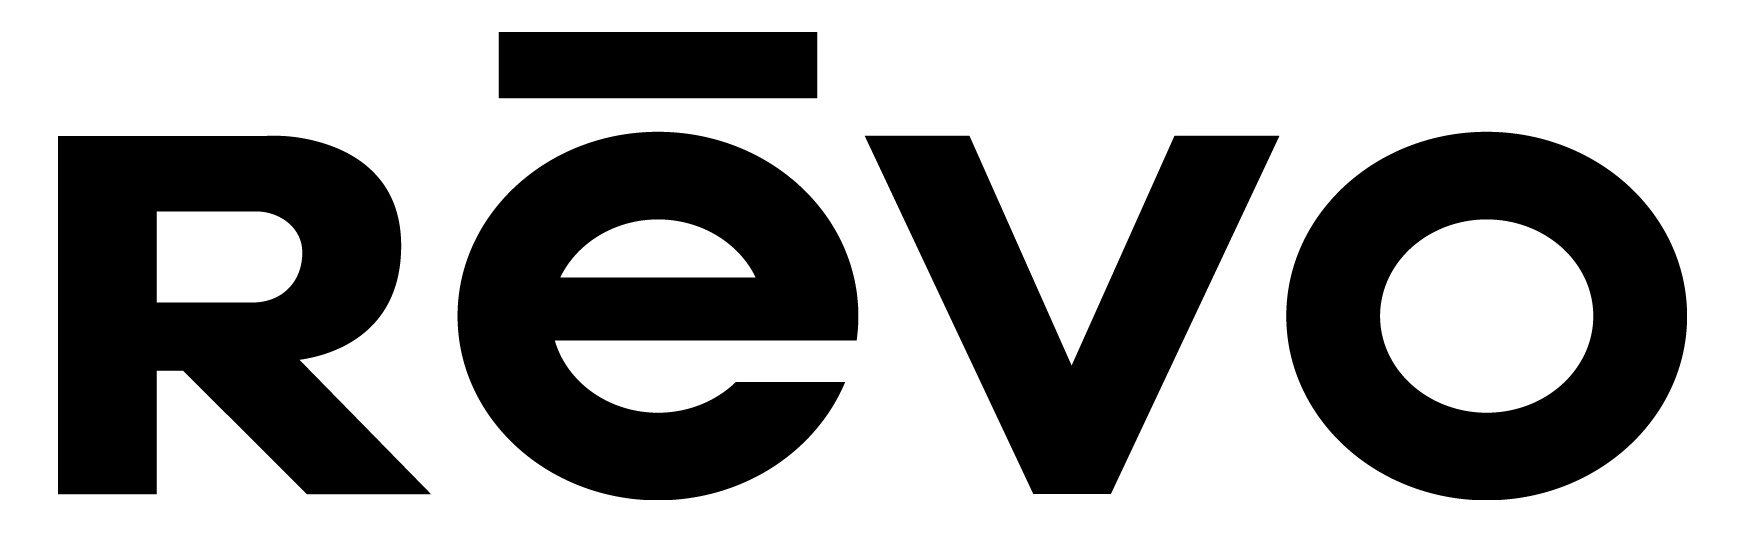 Revo_logo.png